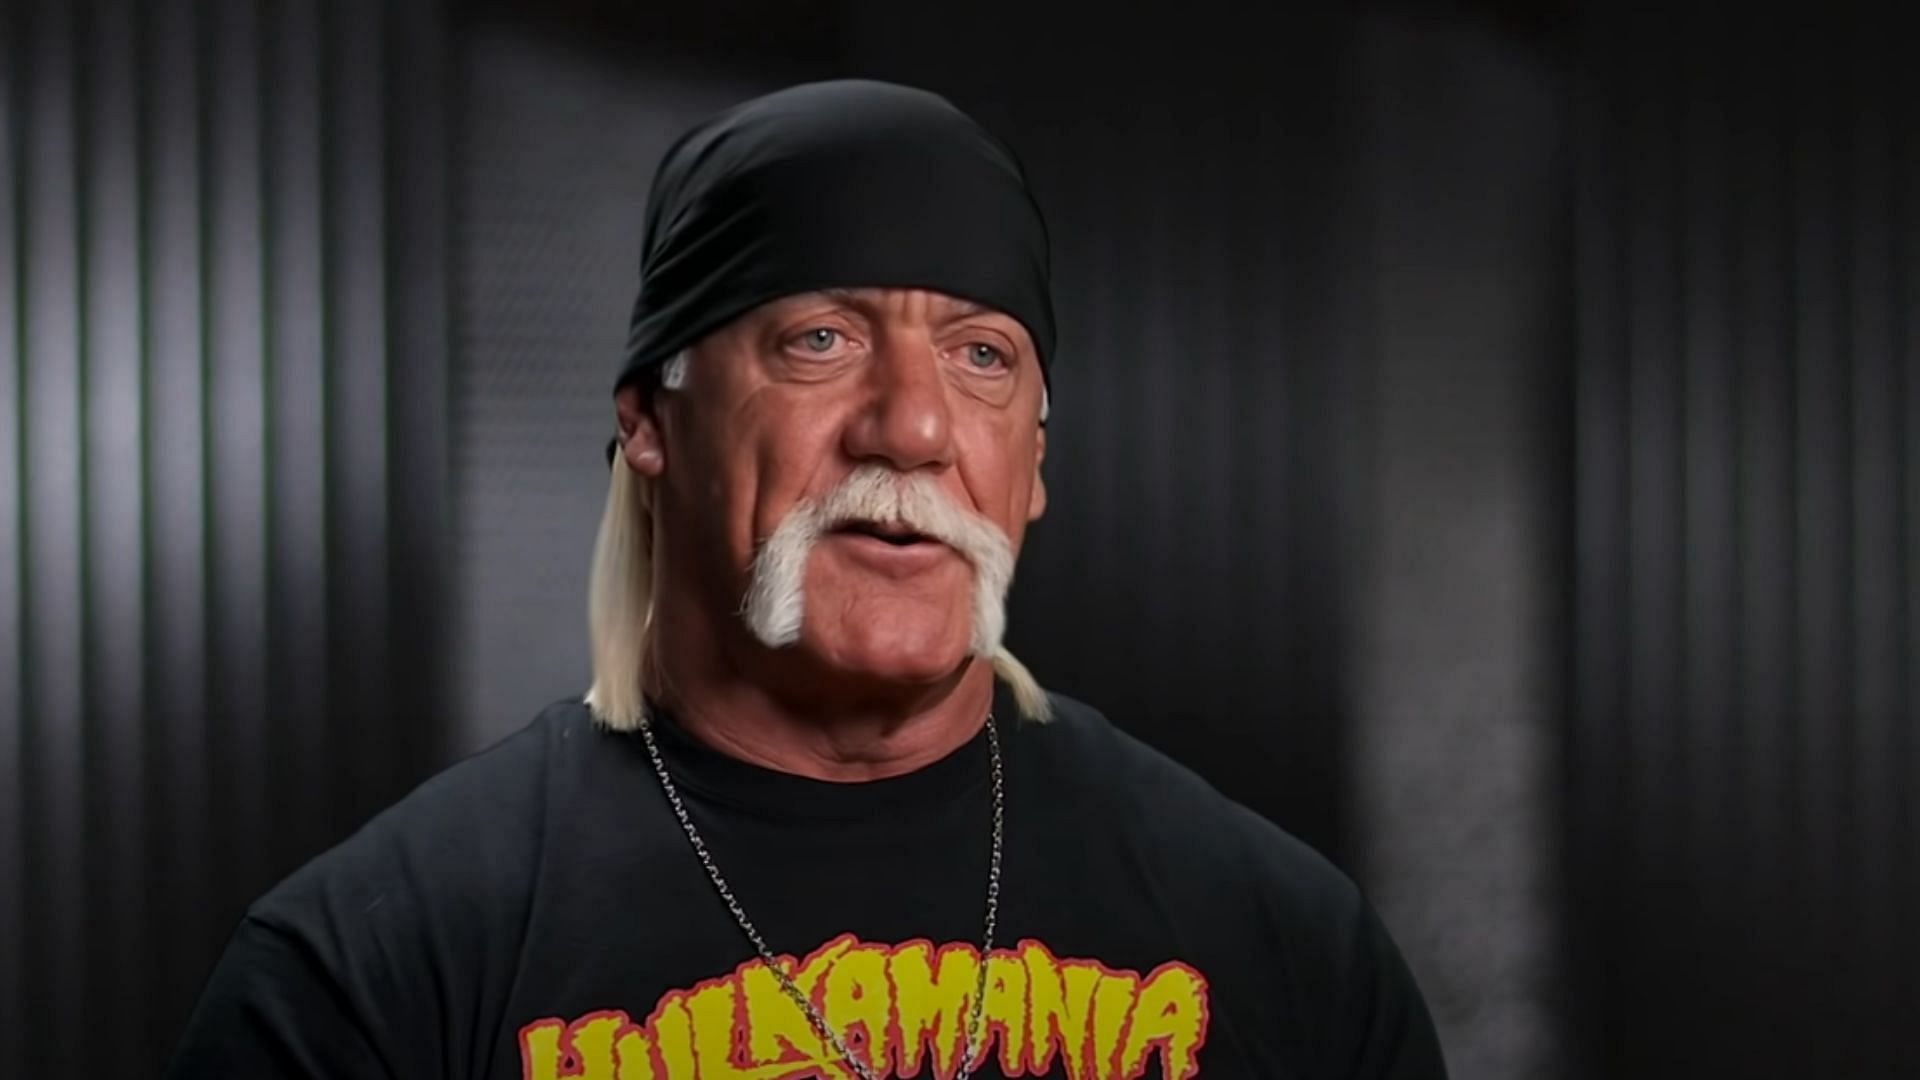 Hulk Hogan is widely viewed as one of wrestling